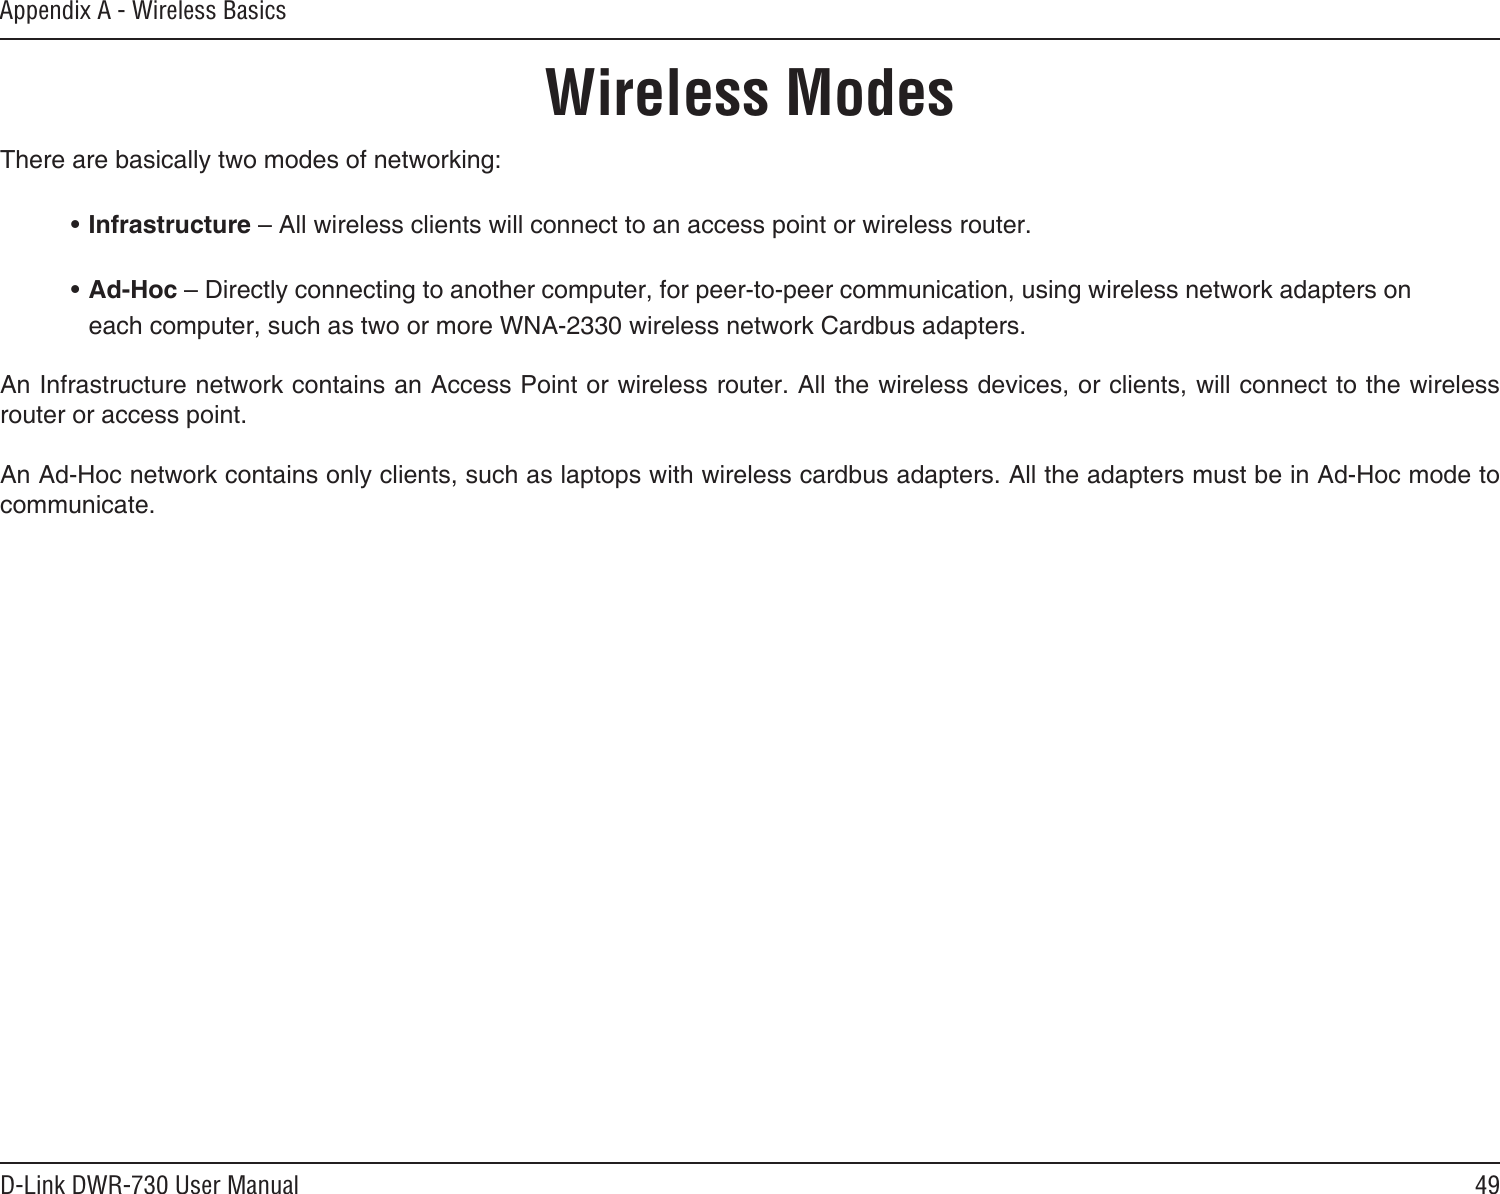 49D-Link DWR-730 User ManualAppendix A - Wireless BasicsWireless Modes